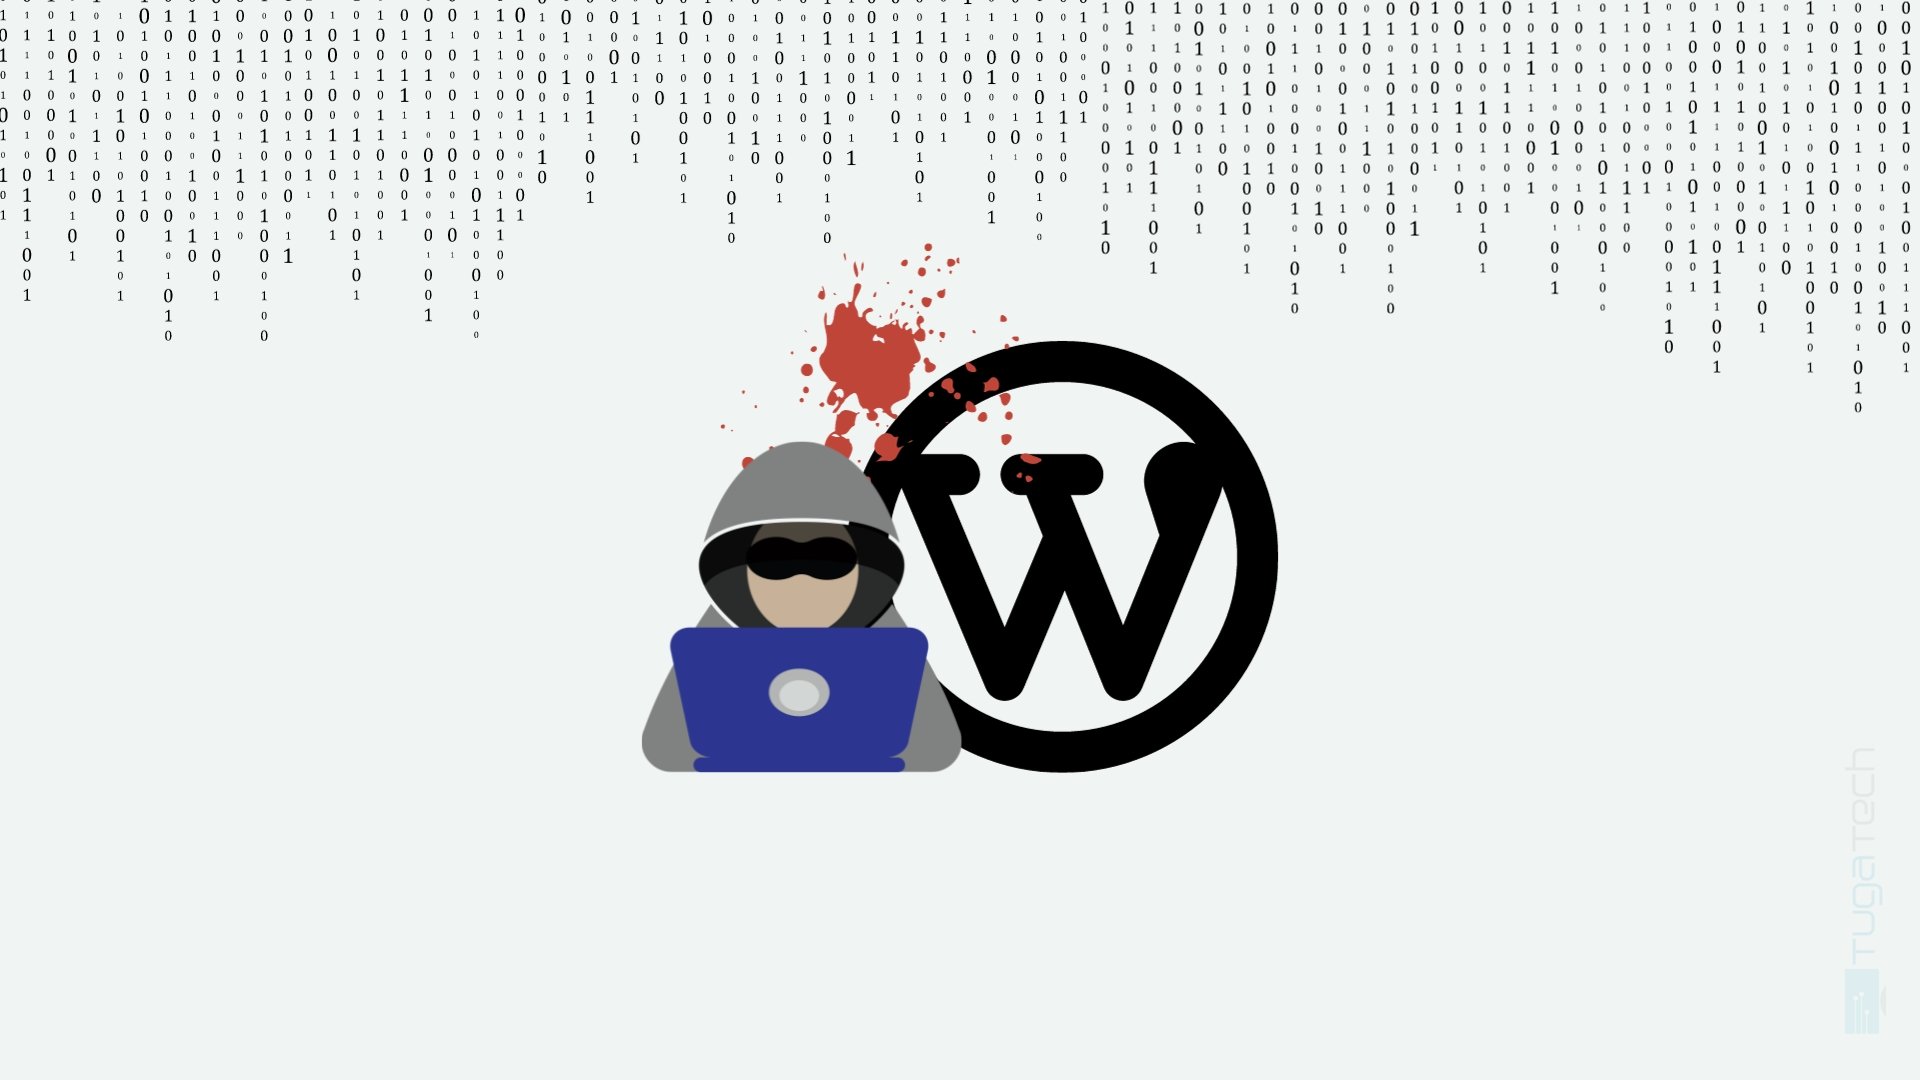 Falso alerta de vulnerabilidade afeta administradores de sites WordPress